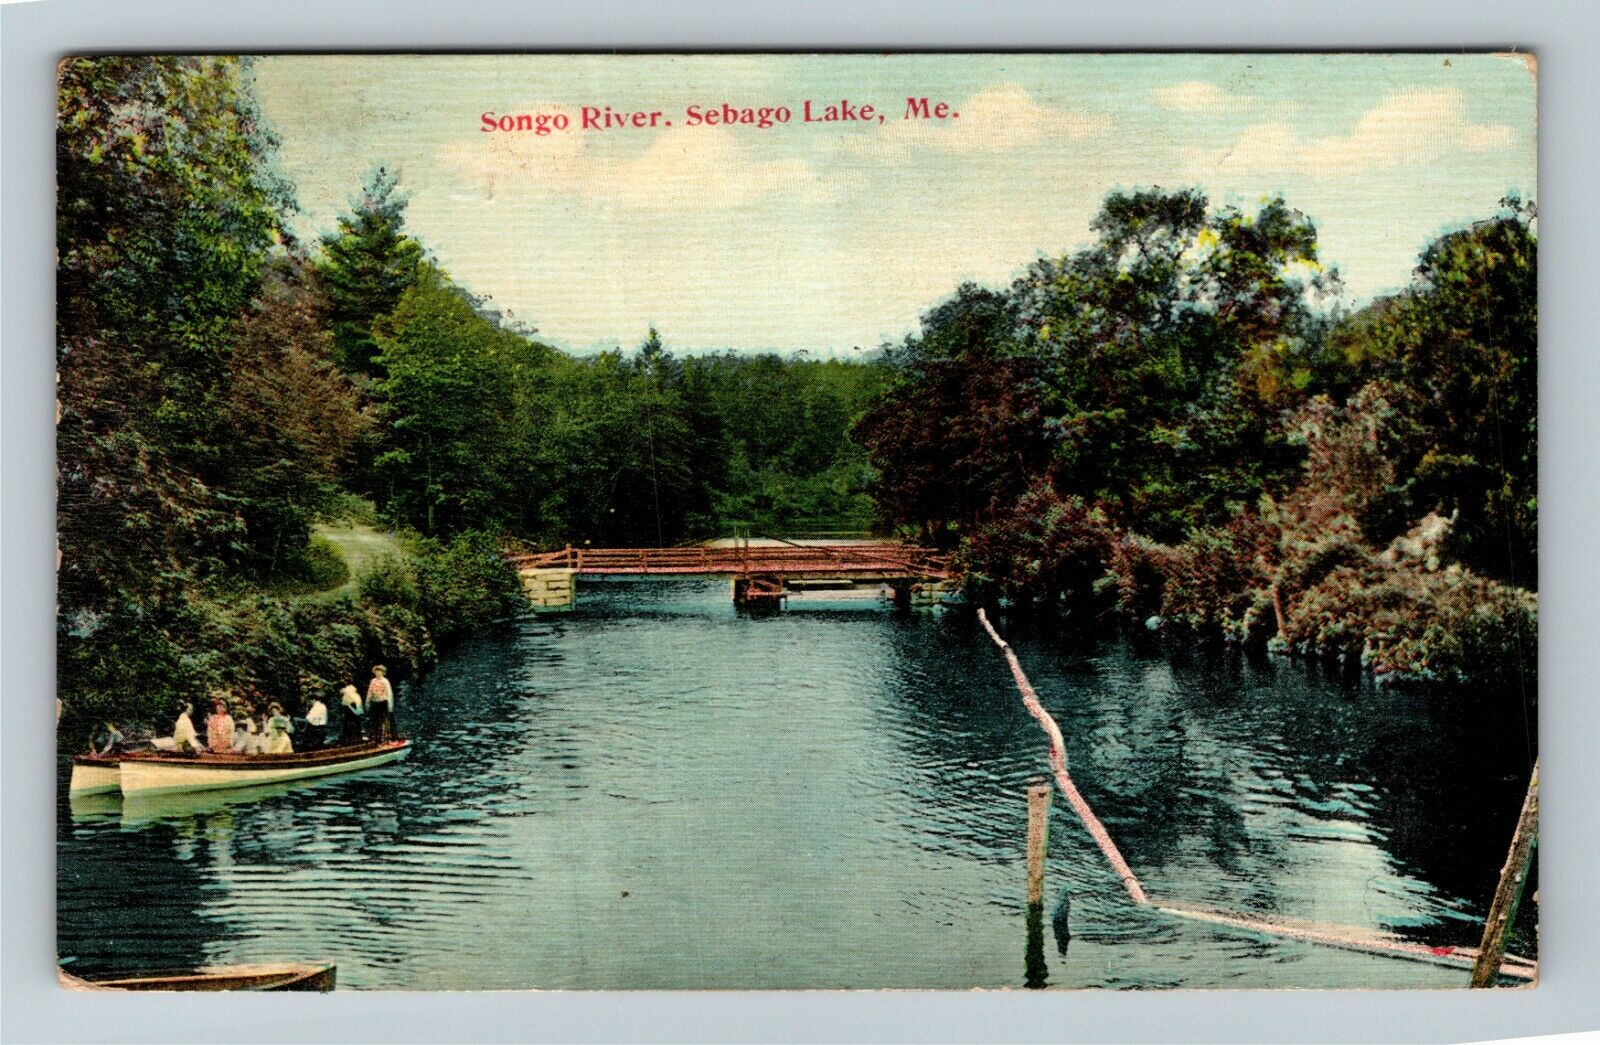 Sebago Lake Maine, SONGO RIVER, Scenic View Water, c1911 Vintage Postcard